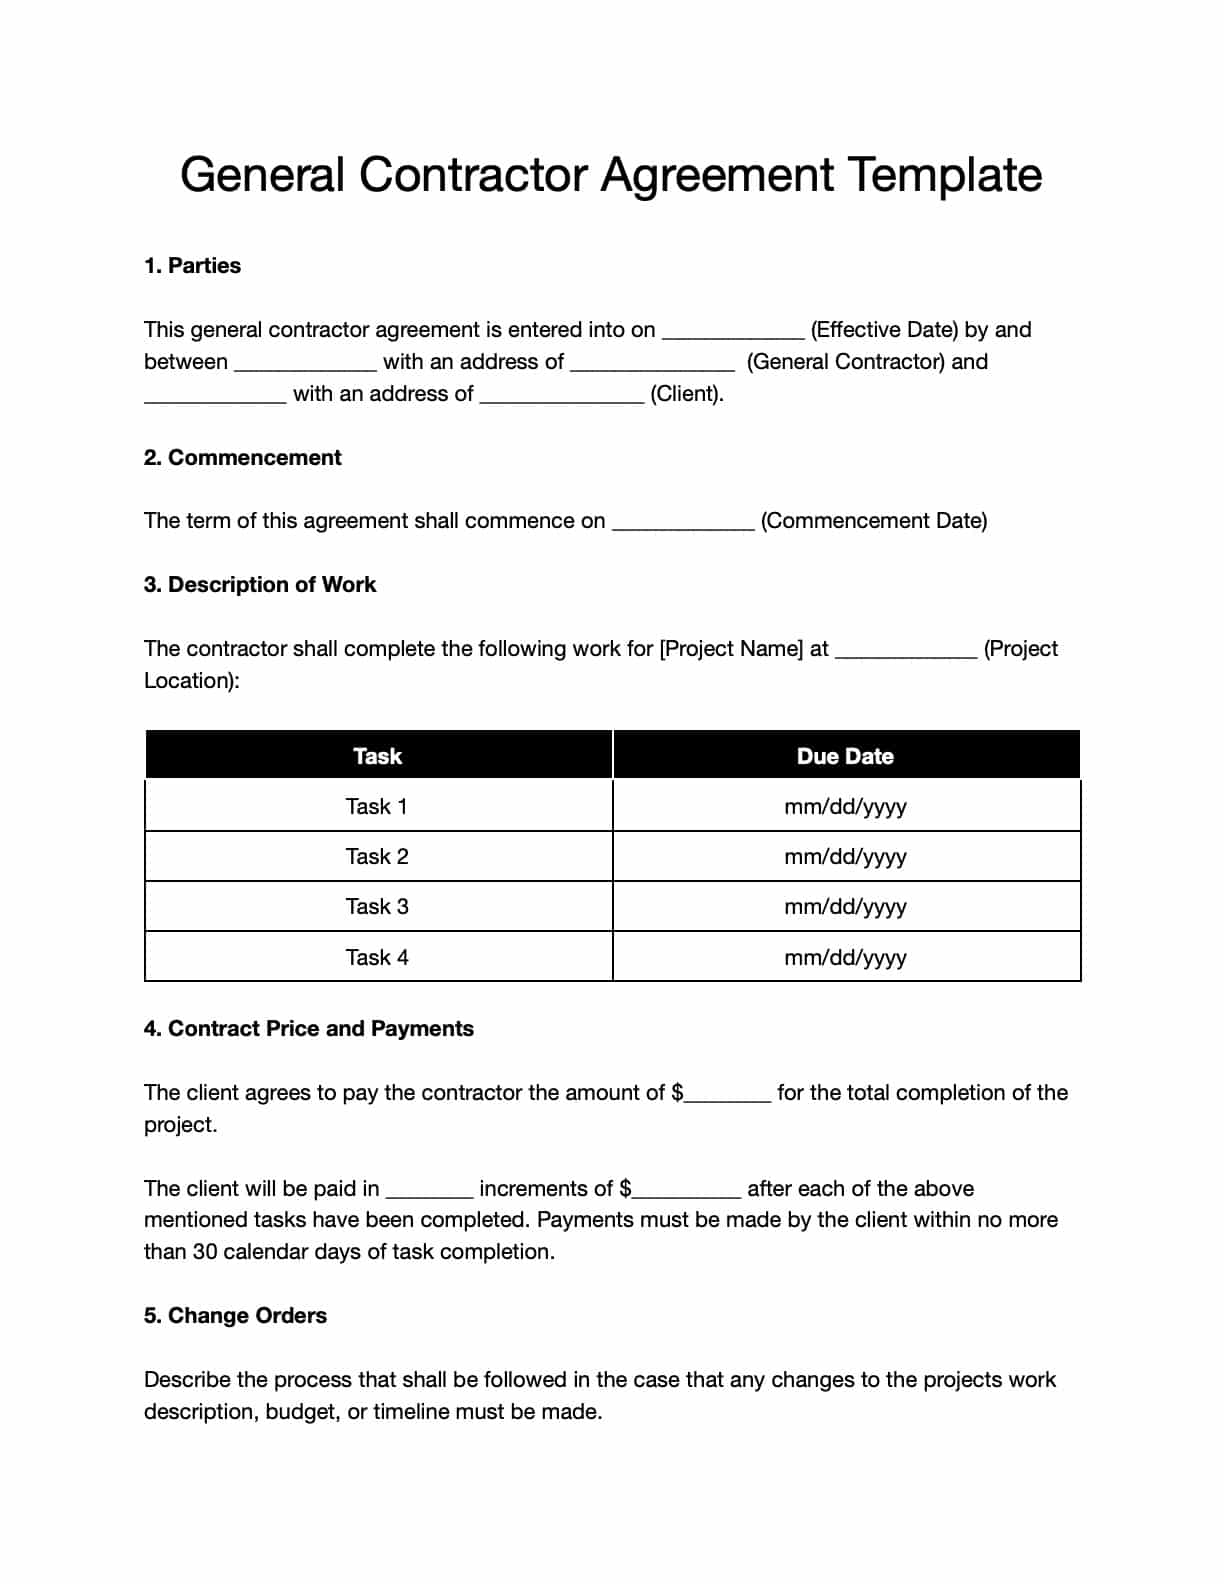 General Contractor Agreement